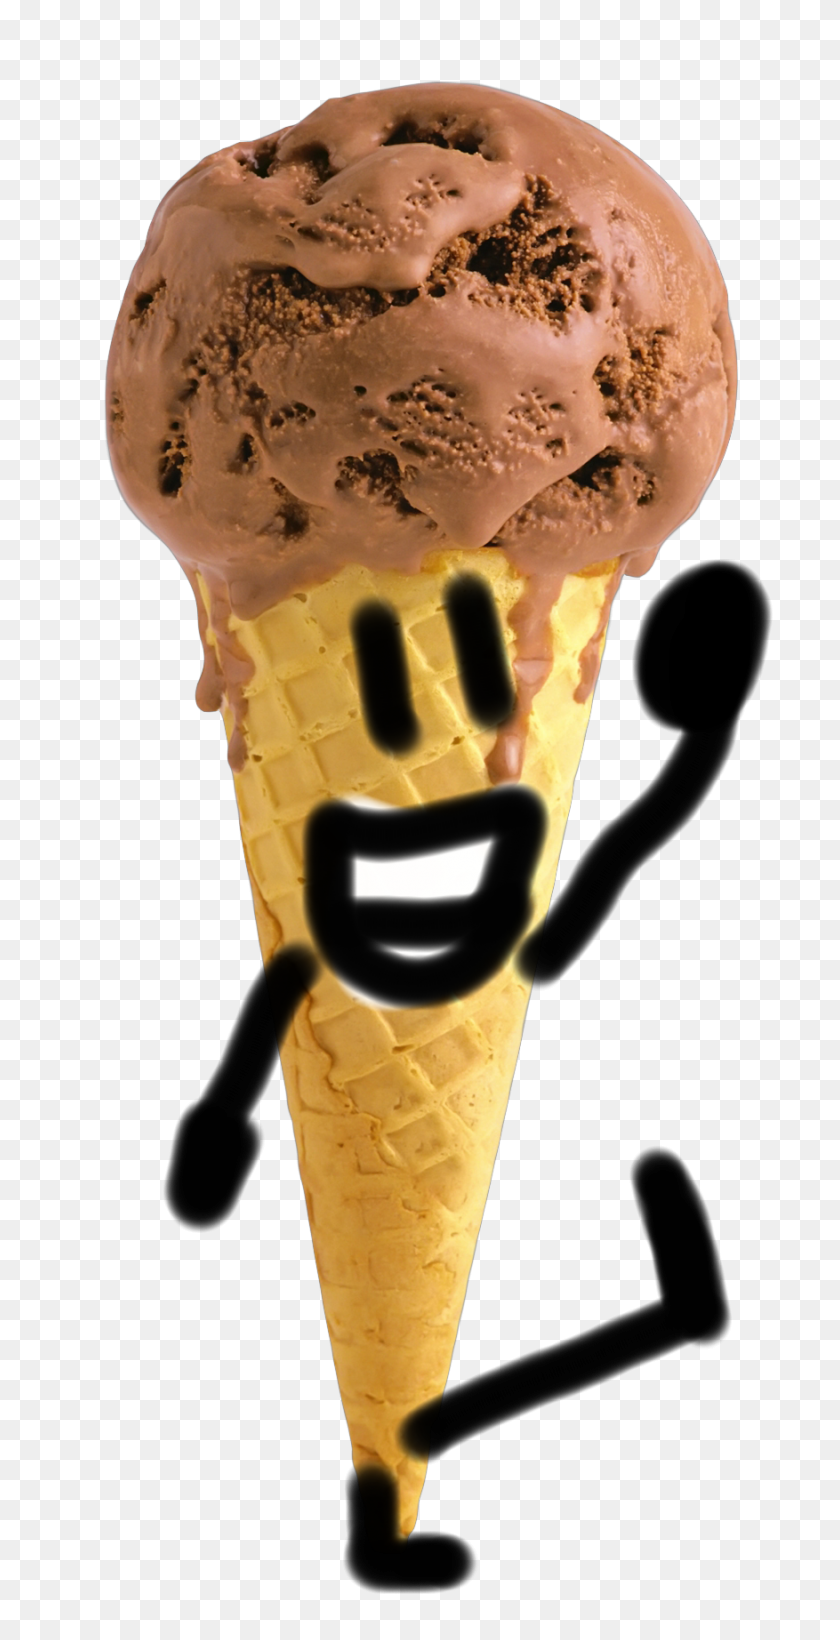 877x1777 Image - Ice Cream Cone PNG